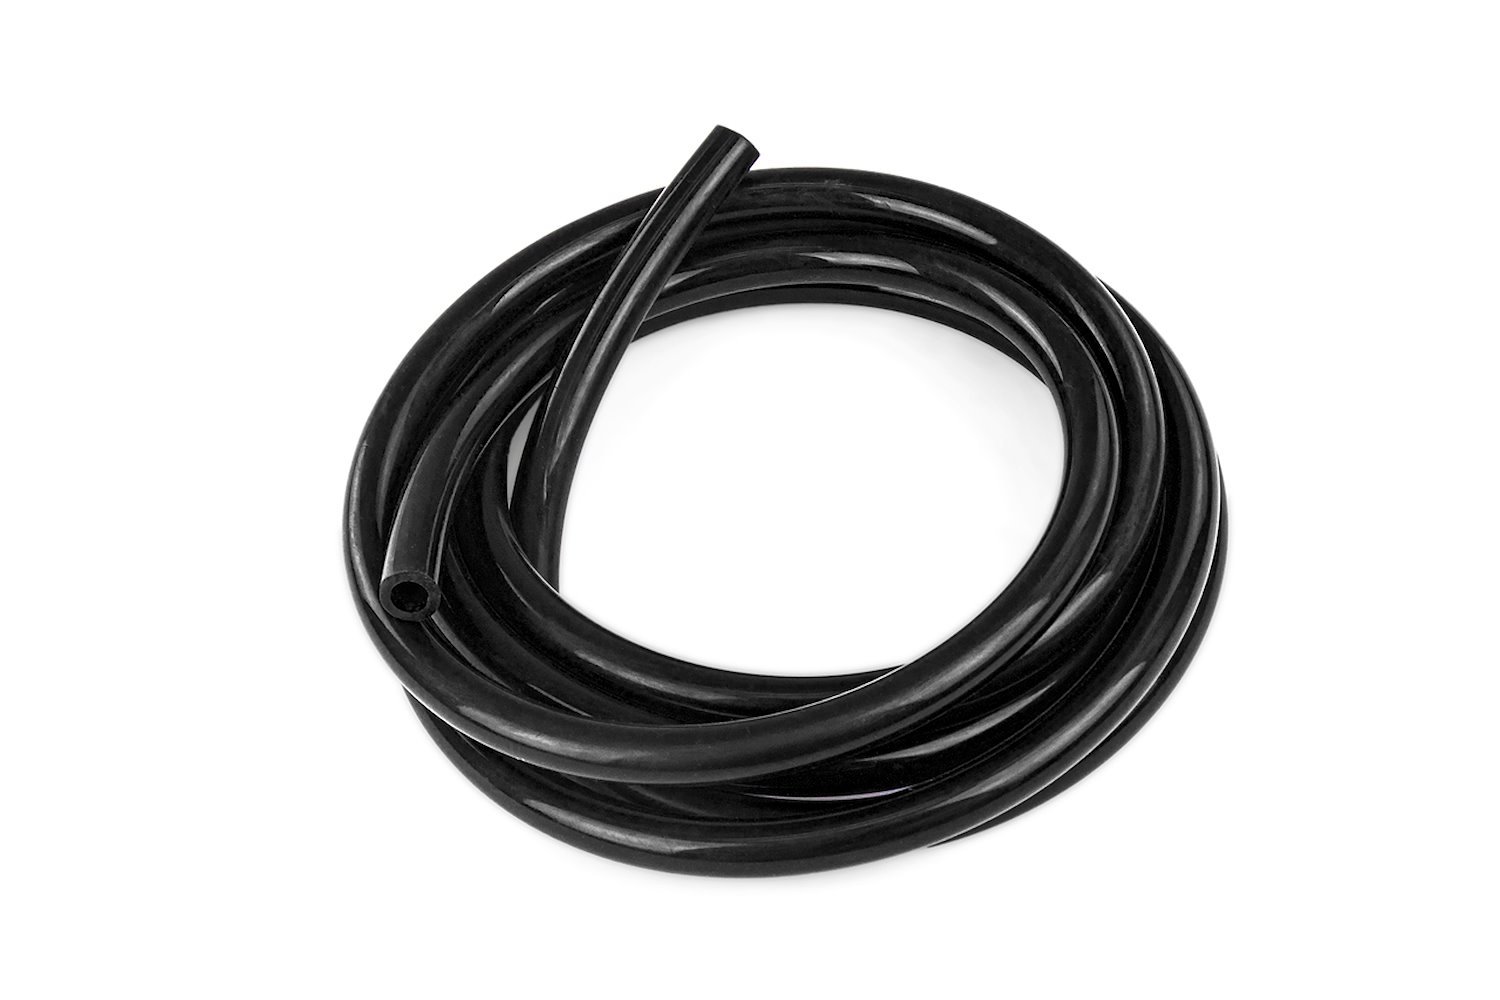 HTSVH3TW-BLKx25 High-Temperature Silicone Vacuum Hose Tubing, 1/8 in. ID, 25 ft. Roll, Black